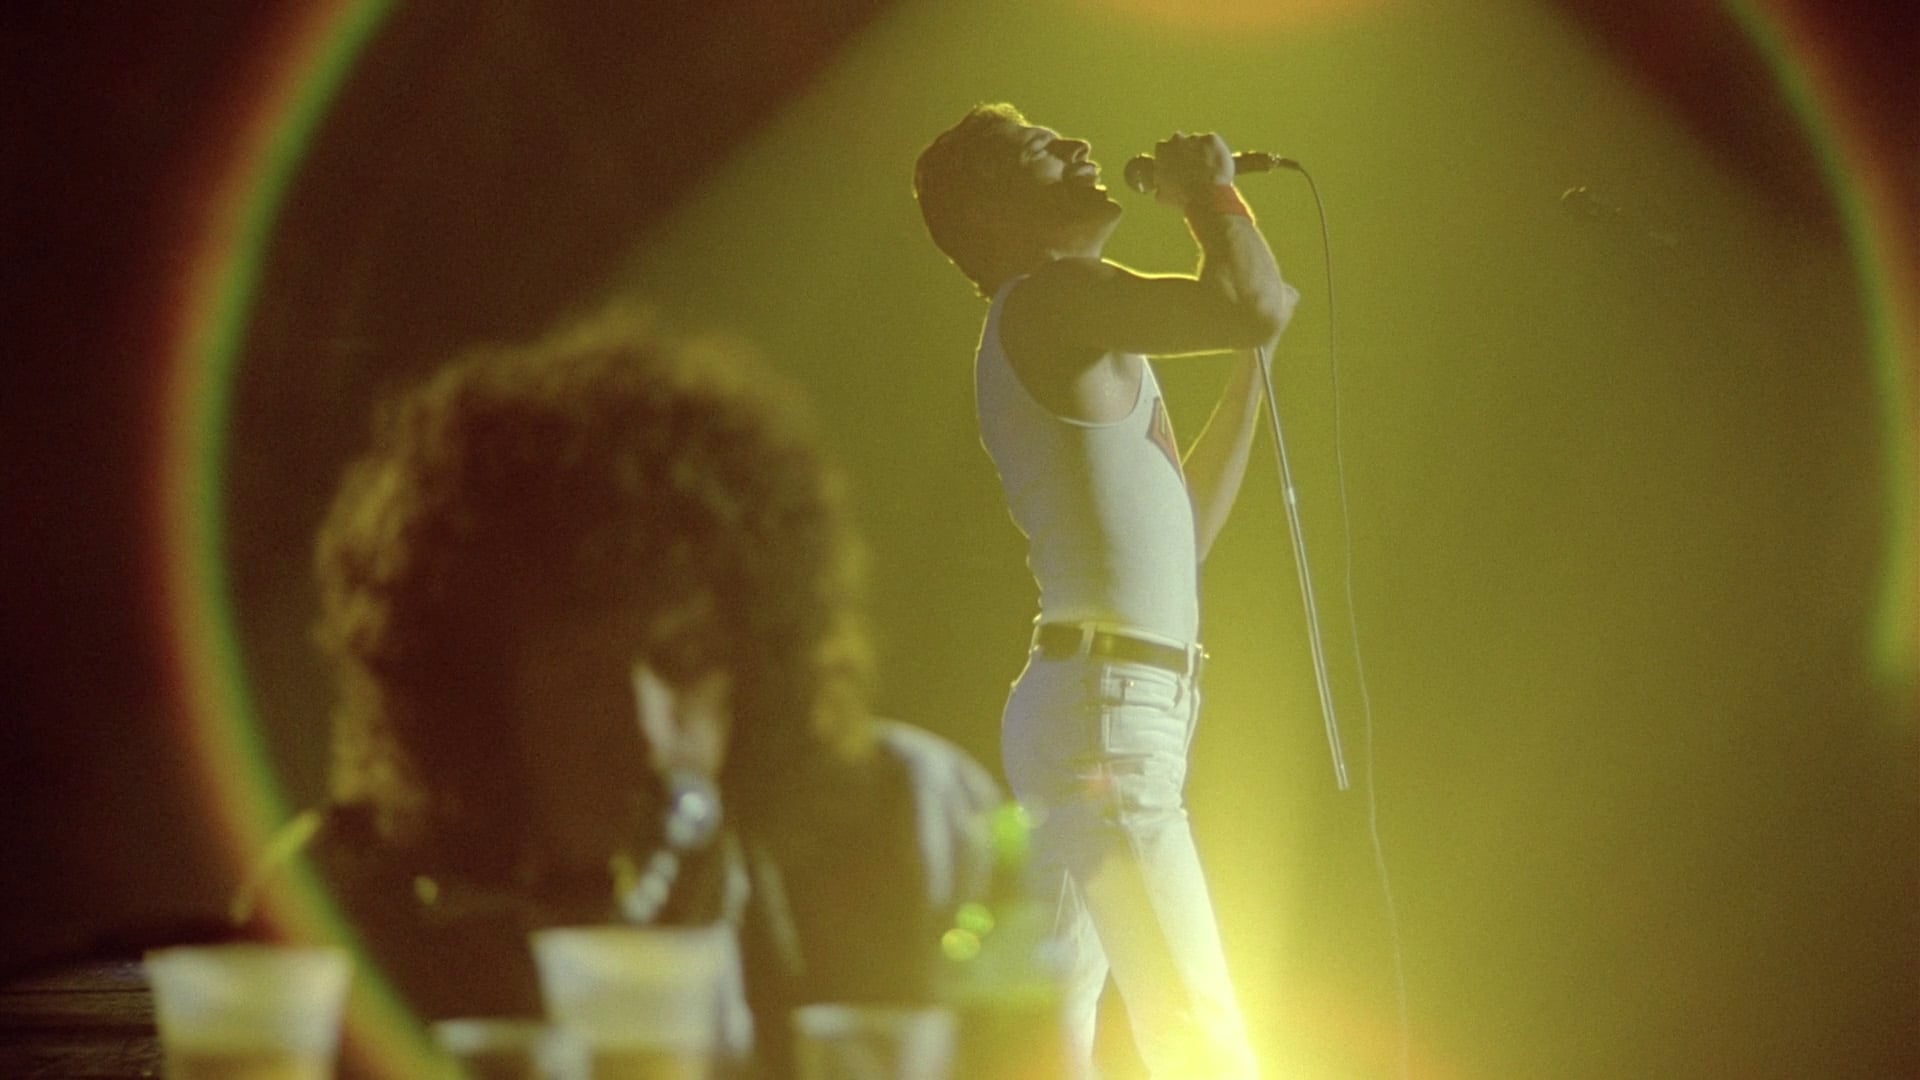 Queen - Bohemian Rhapsody (Live at Rock Montreal, 1981) [HD] 